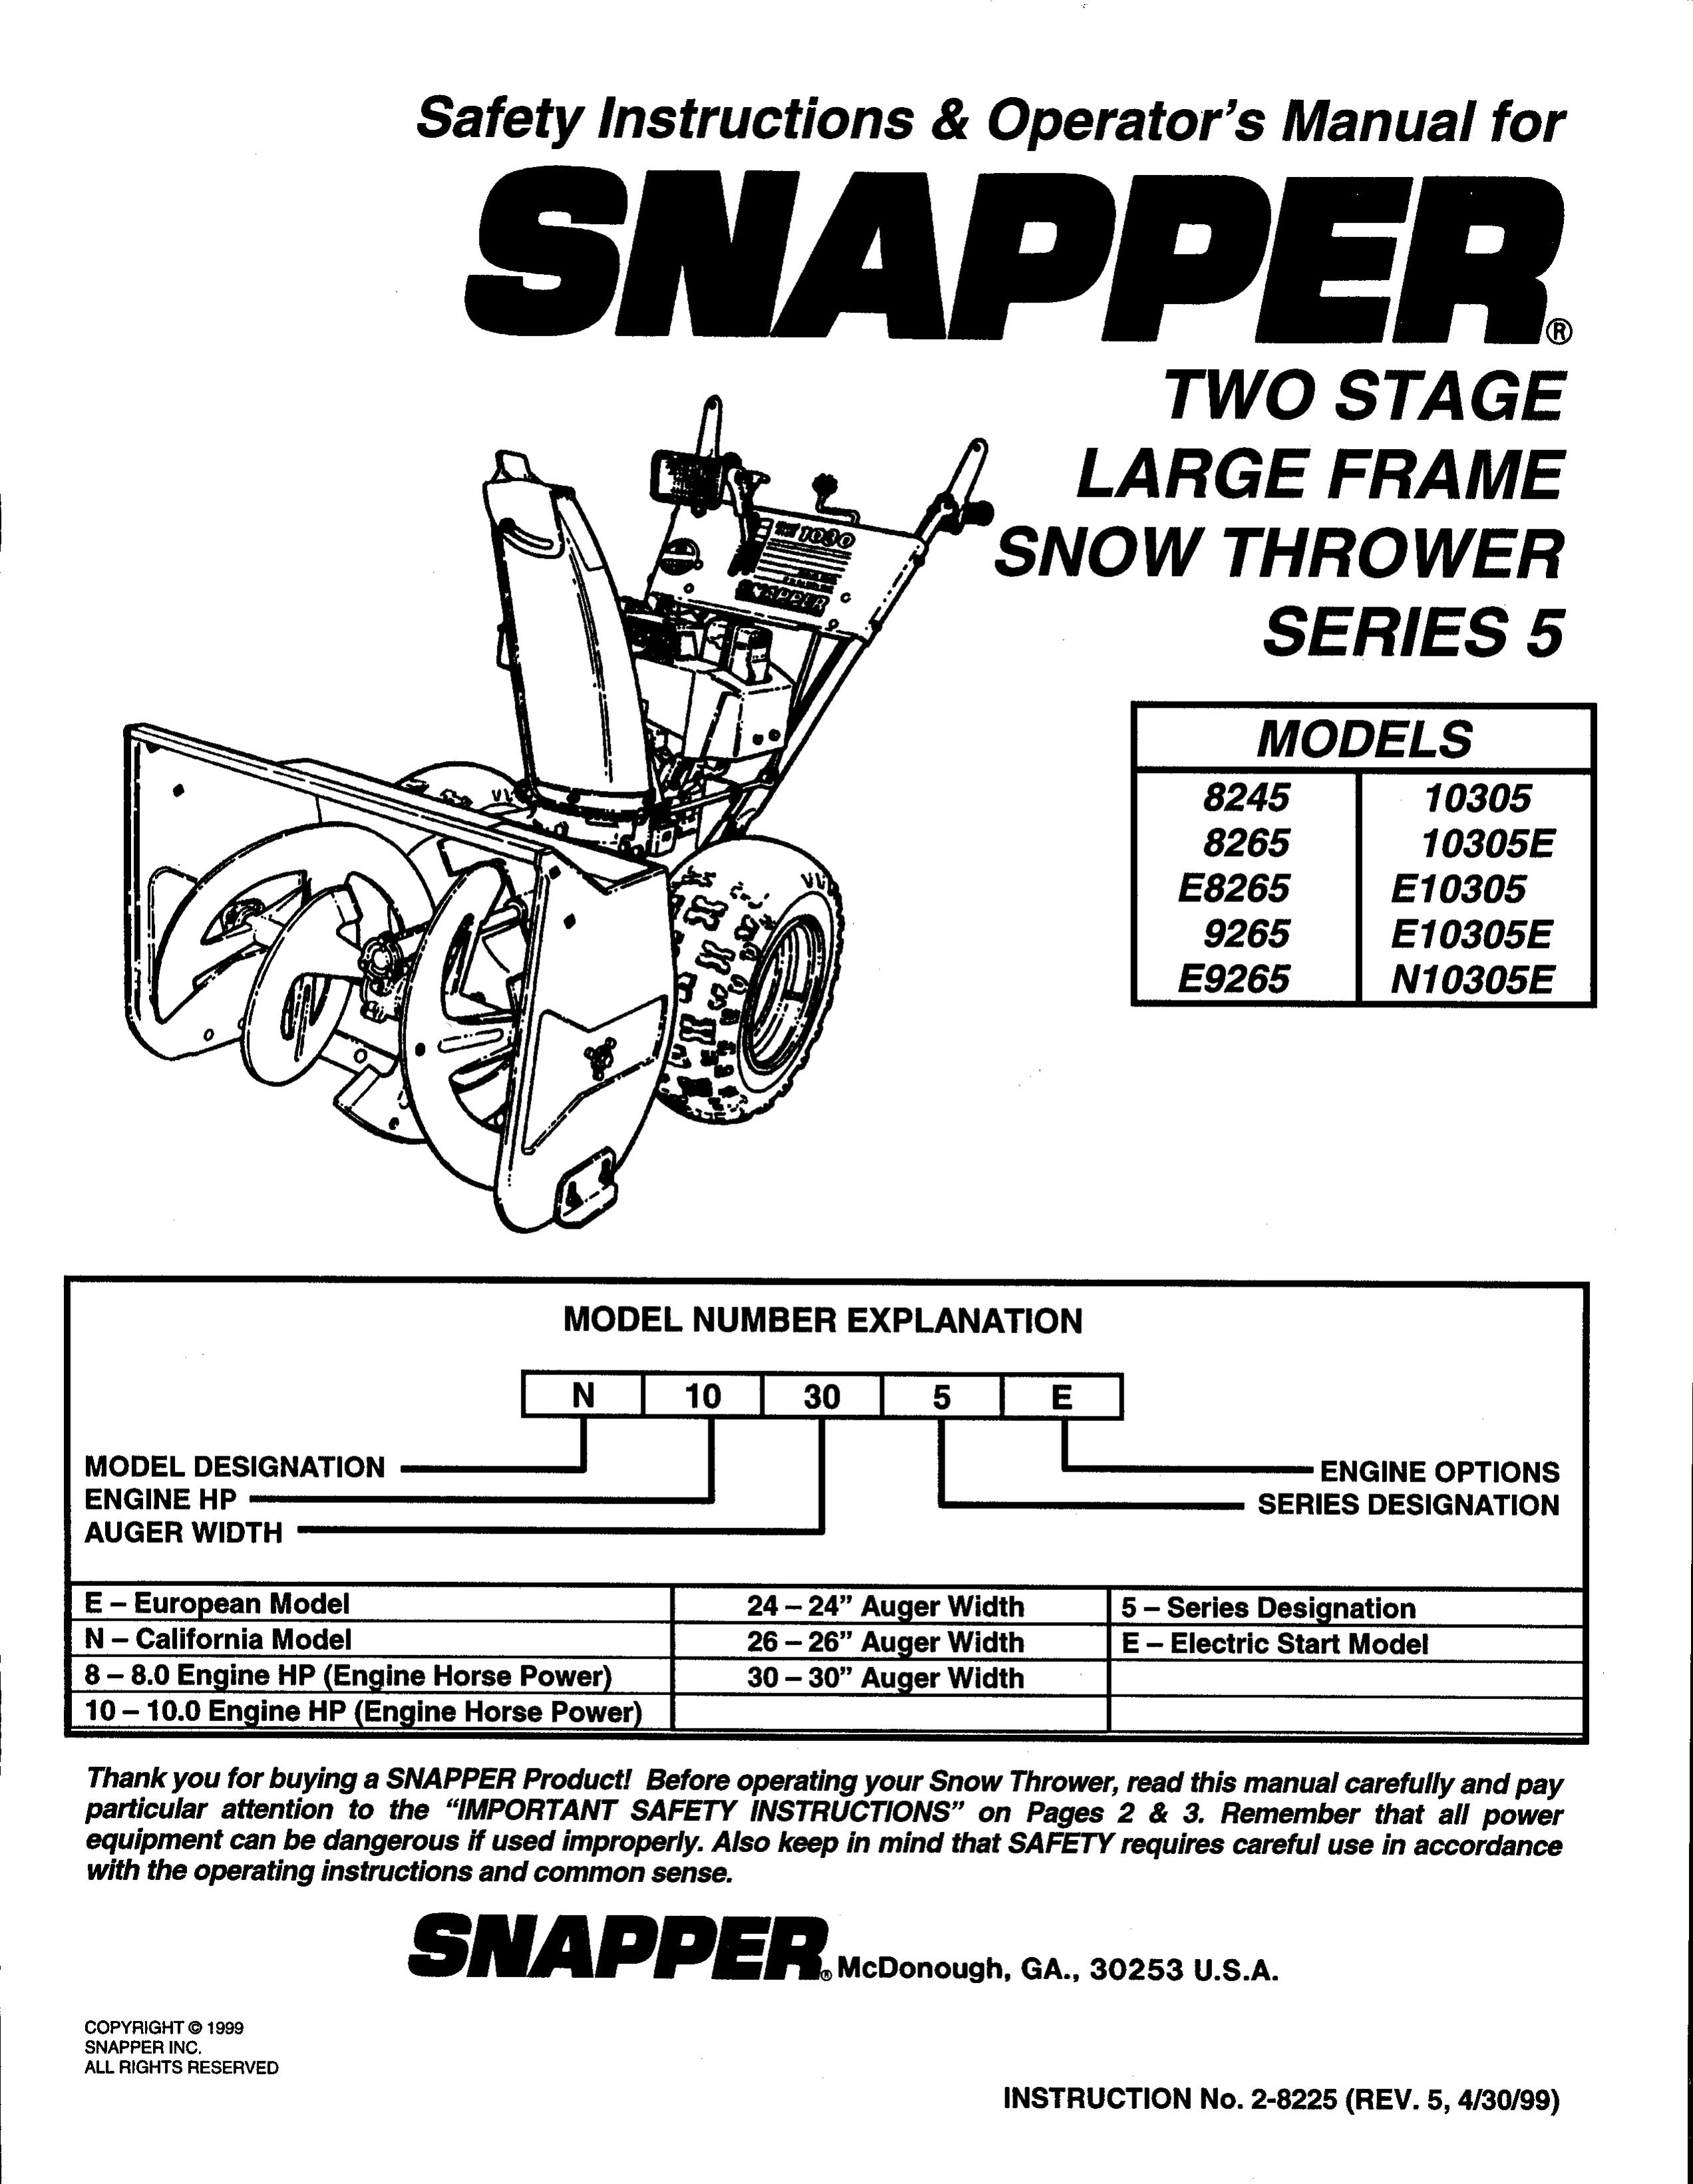 Snapper 10305E Snow Blower User Manual